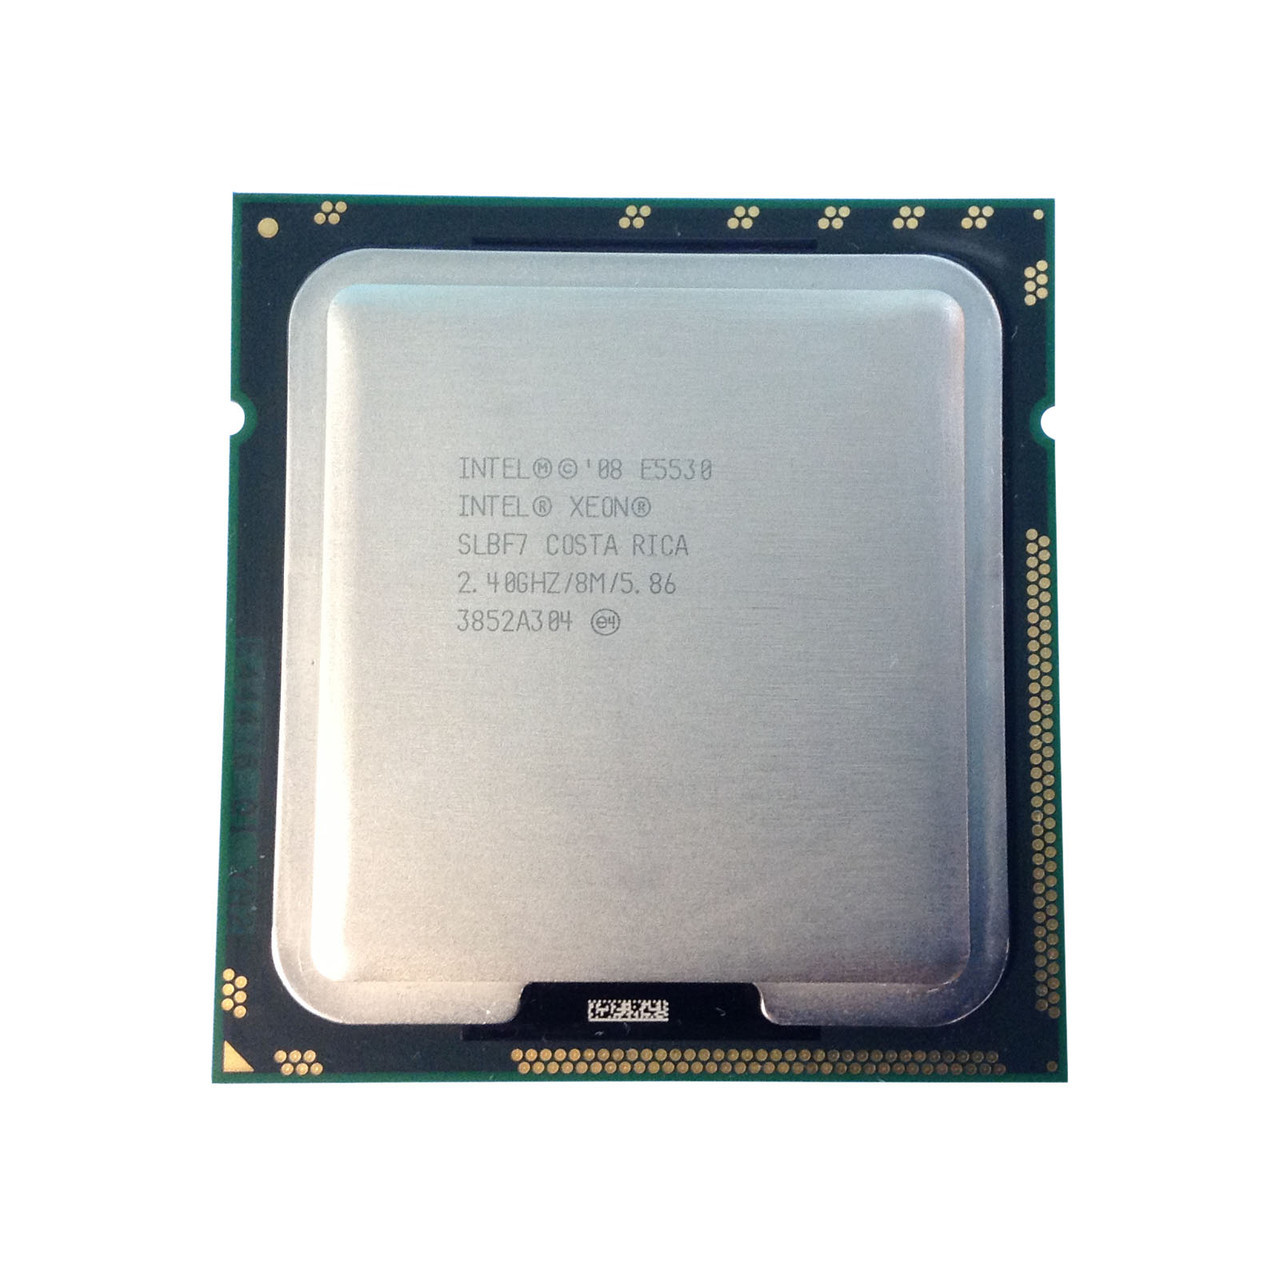 Intel SLBF7 Xeon QC E5530 2.40GHz 8MB Processor